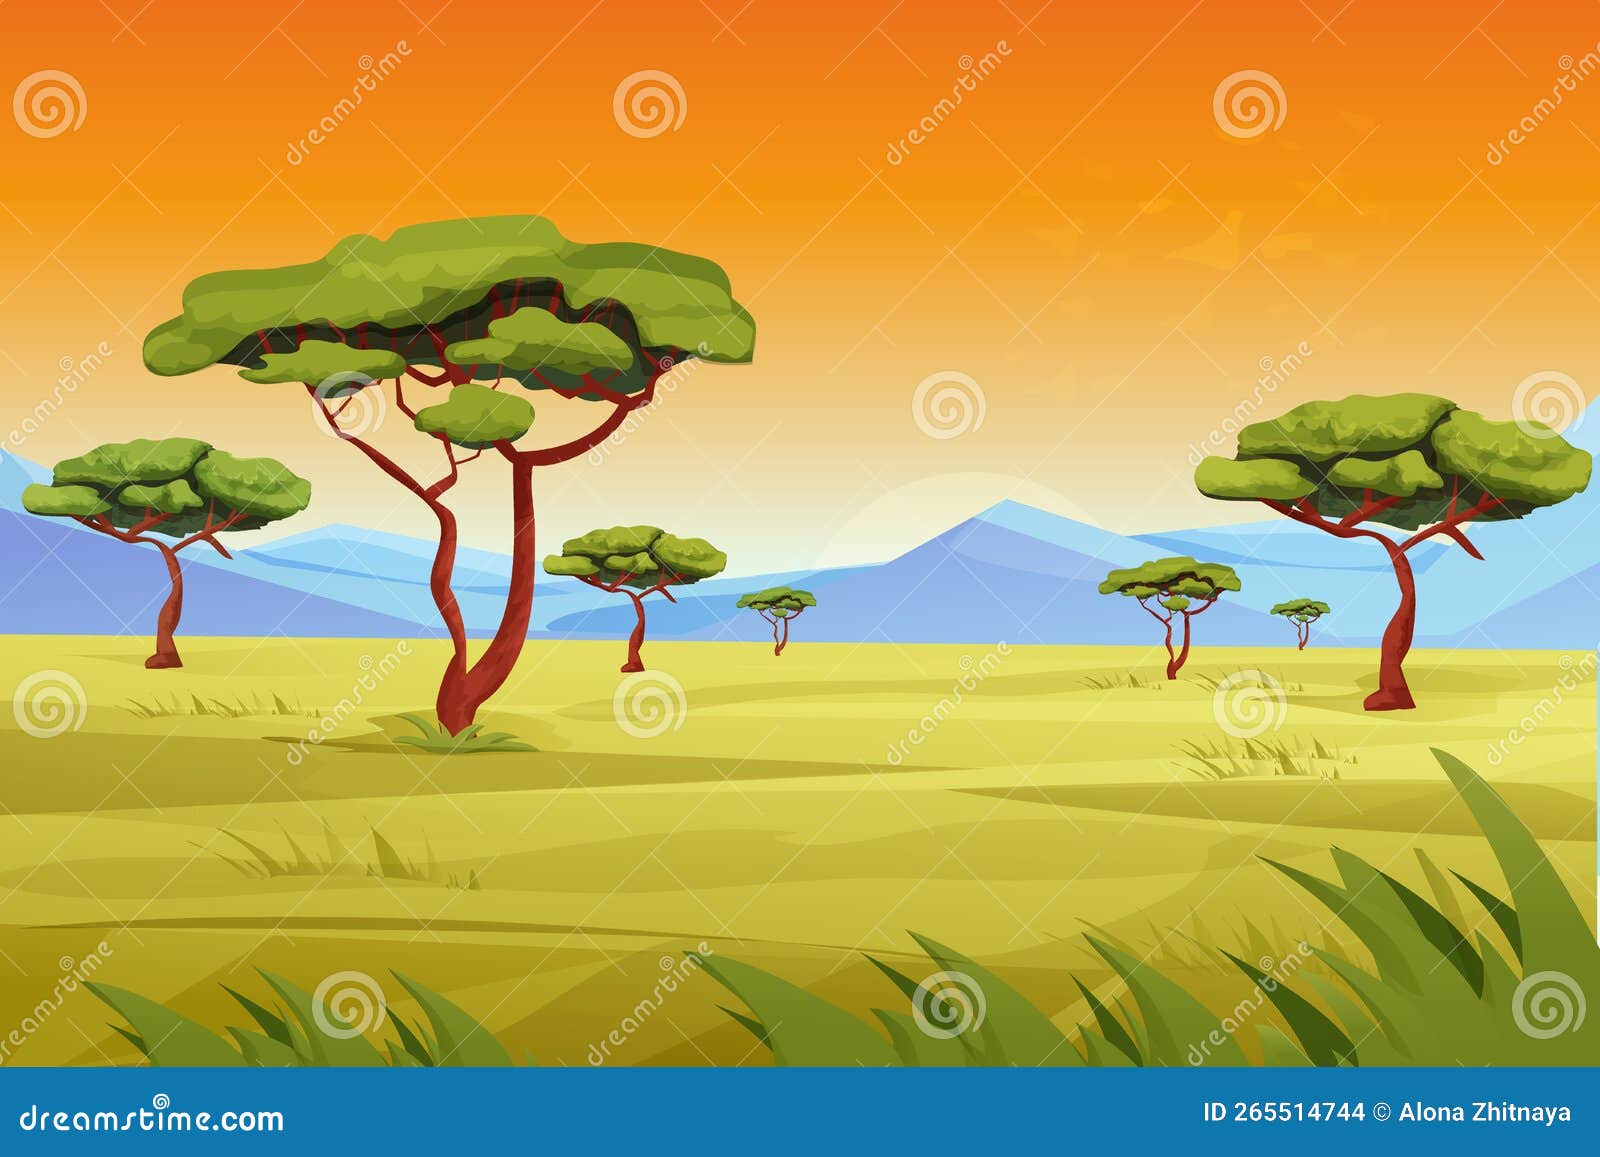 illustration de logo nature arbre. style de dessin animé de